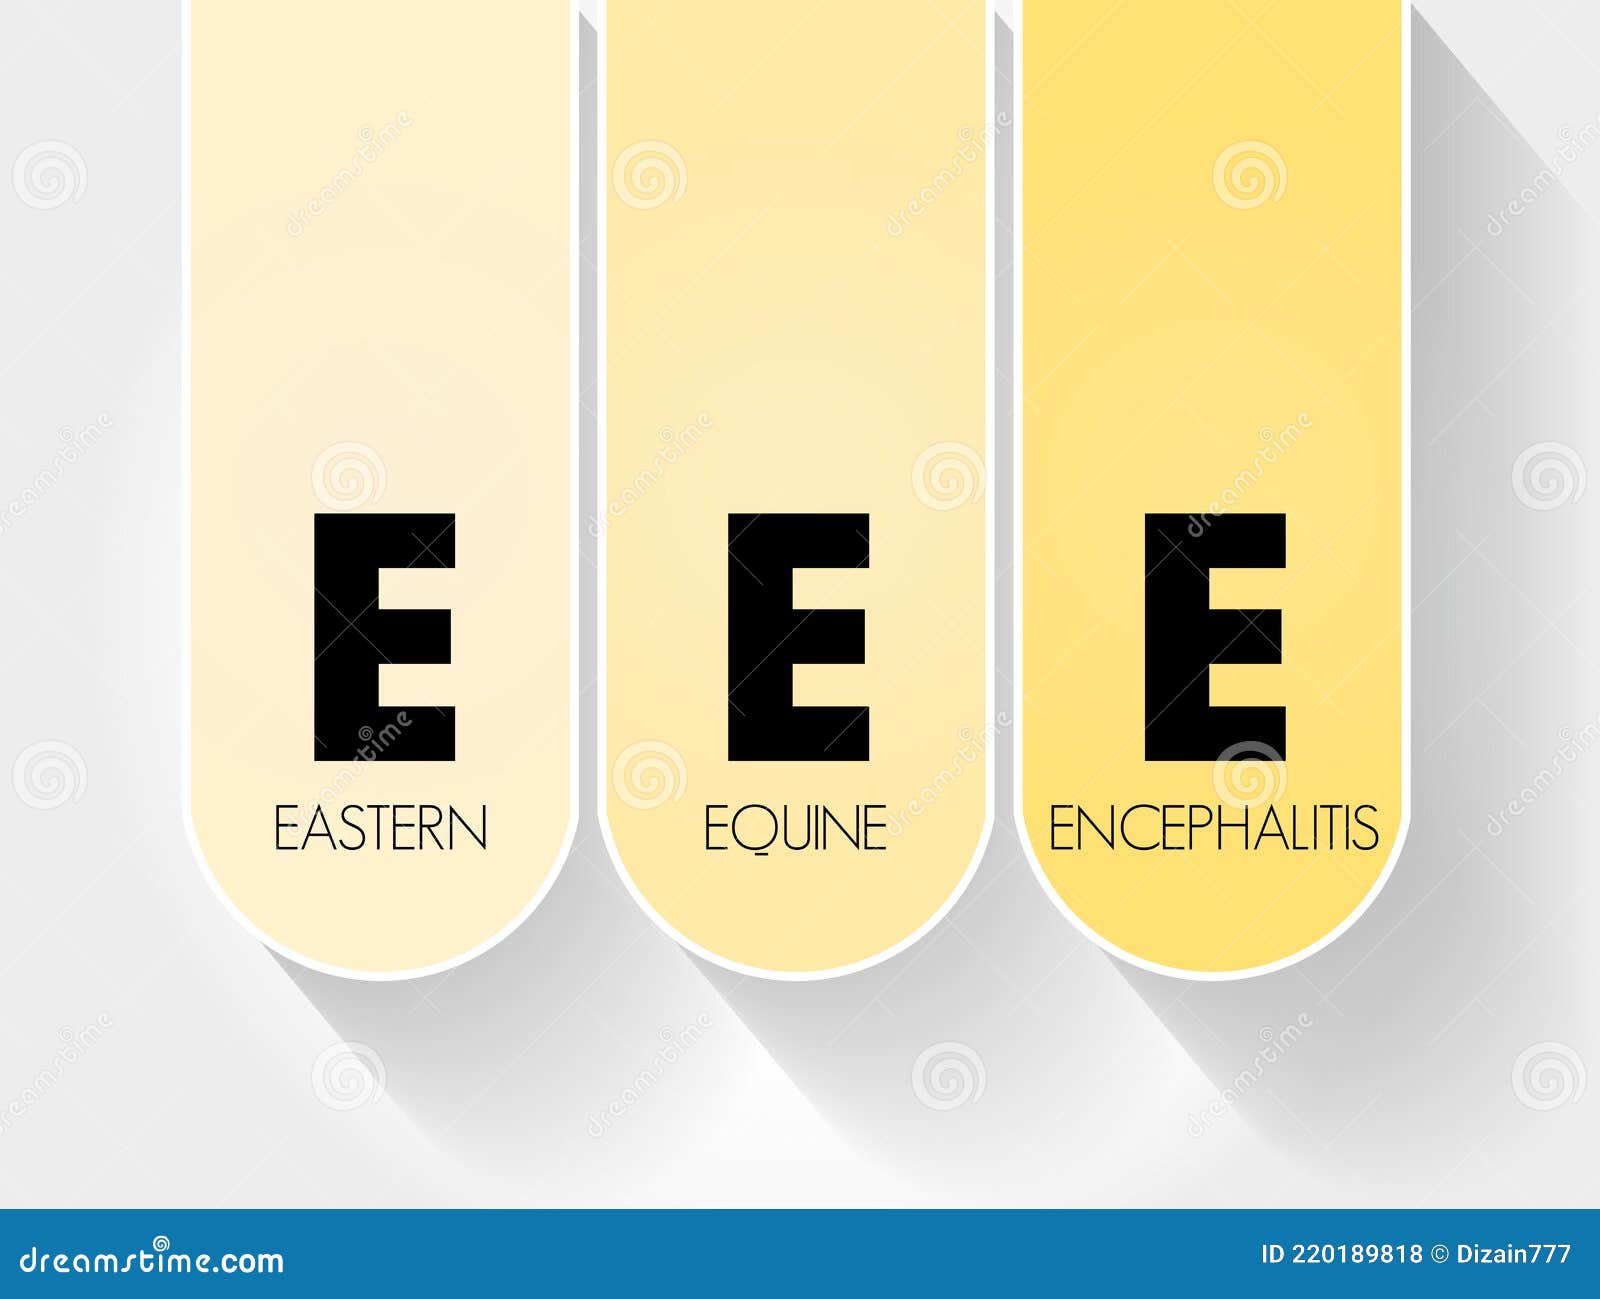 eee - eastern equine encephalitis acronym, medical concept background